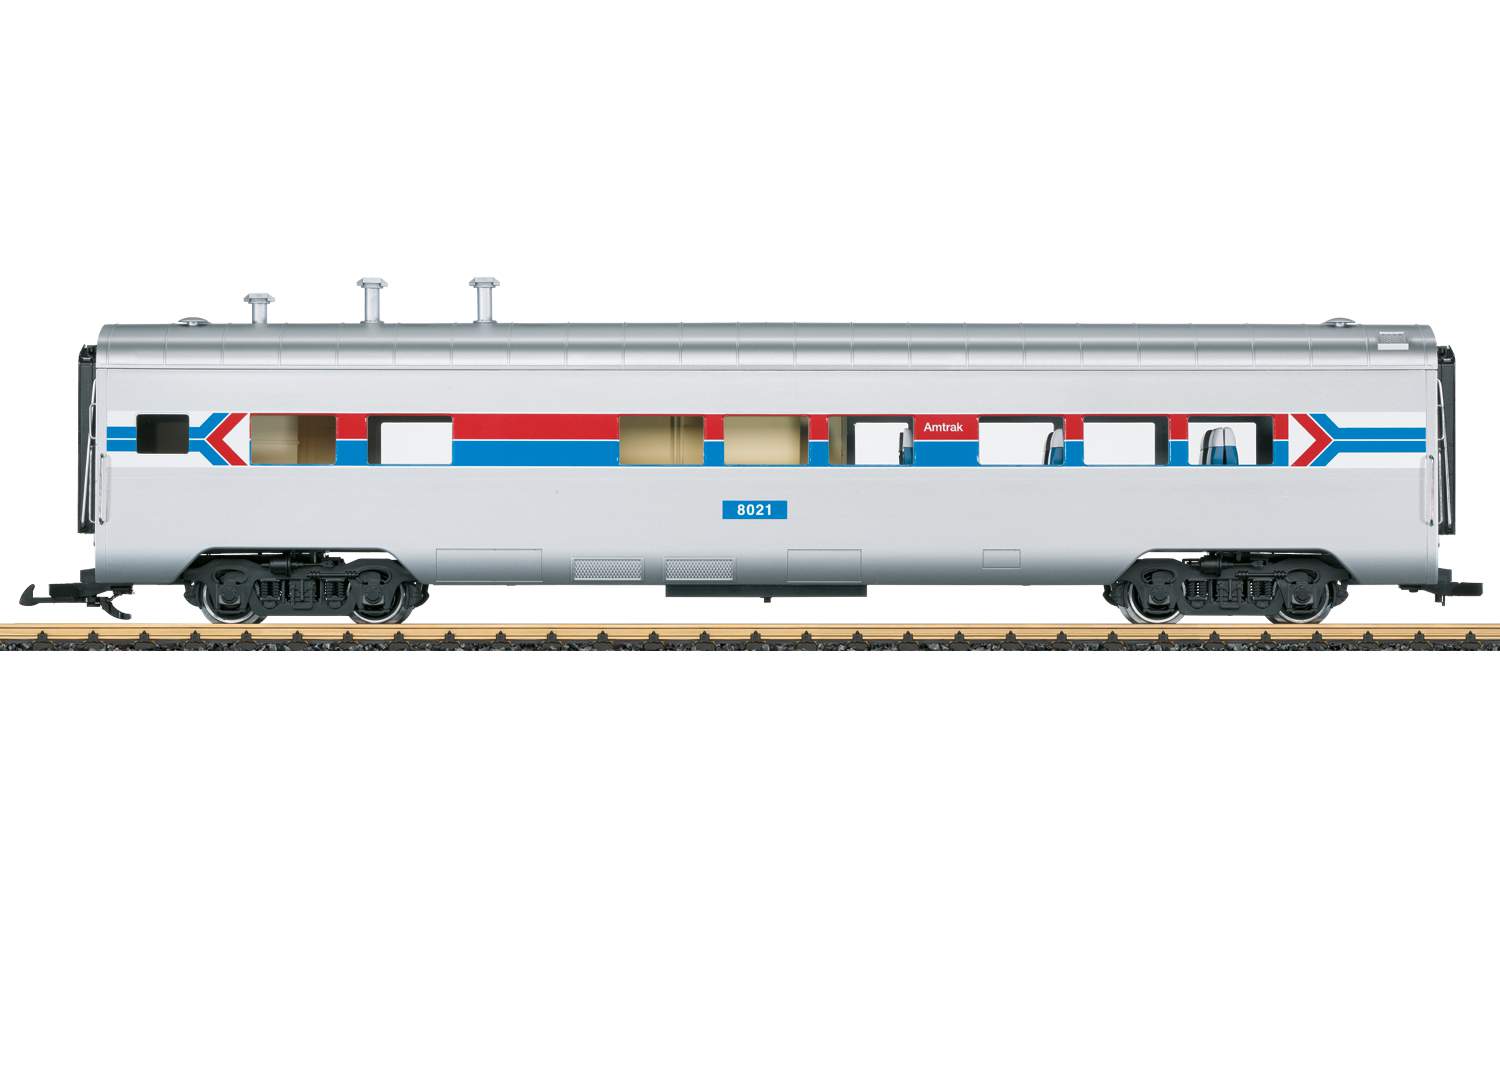 LGB G 36604 Amtrak Dining Car Phase I 2021 New Item